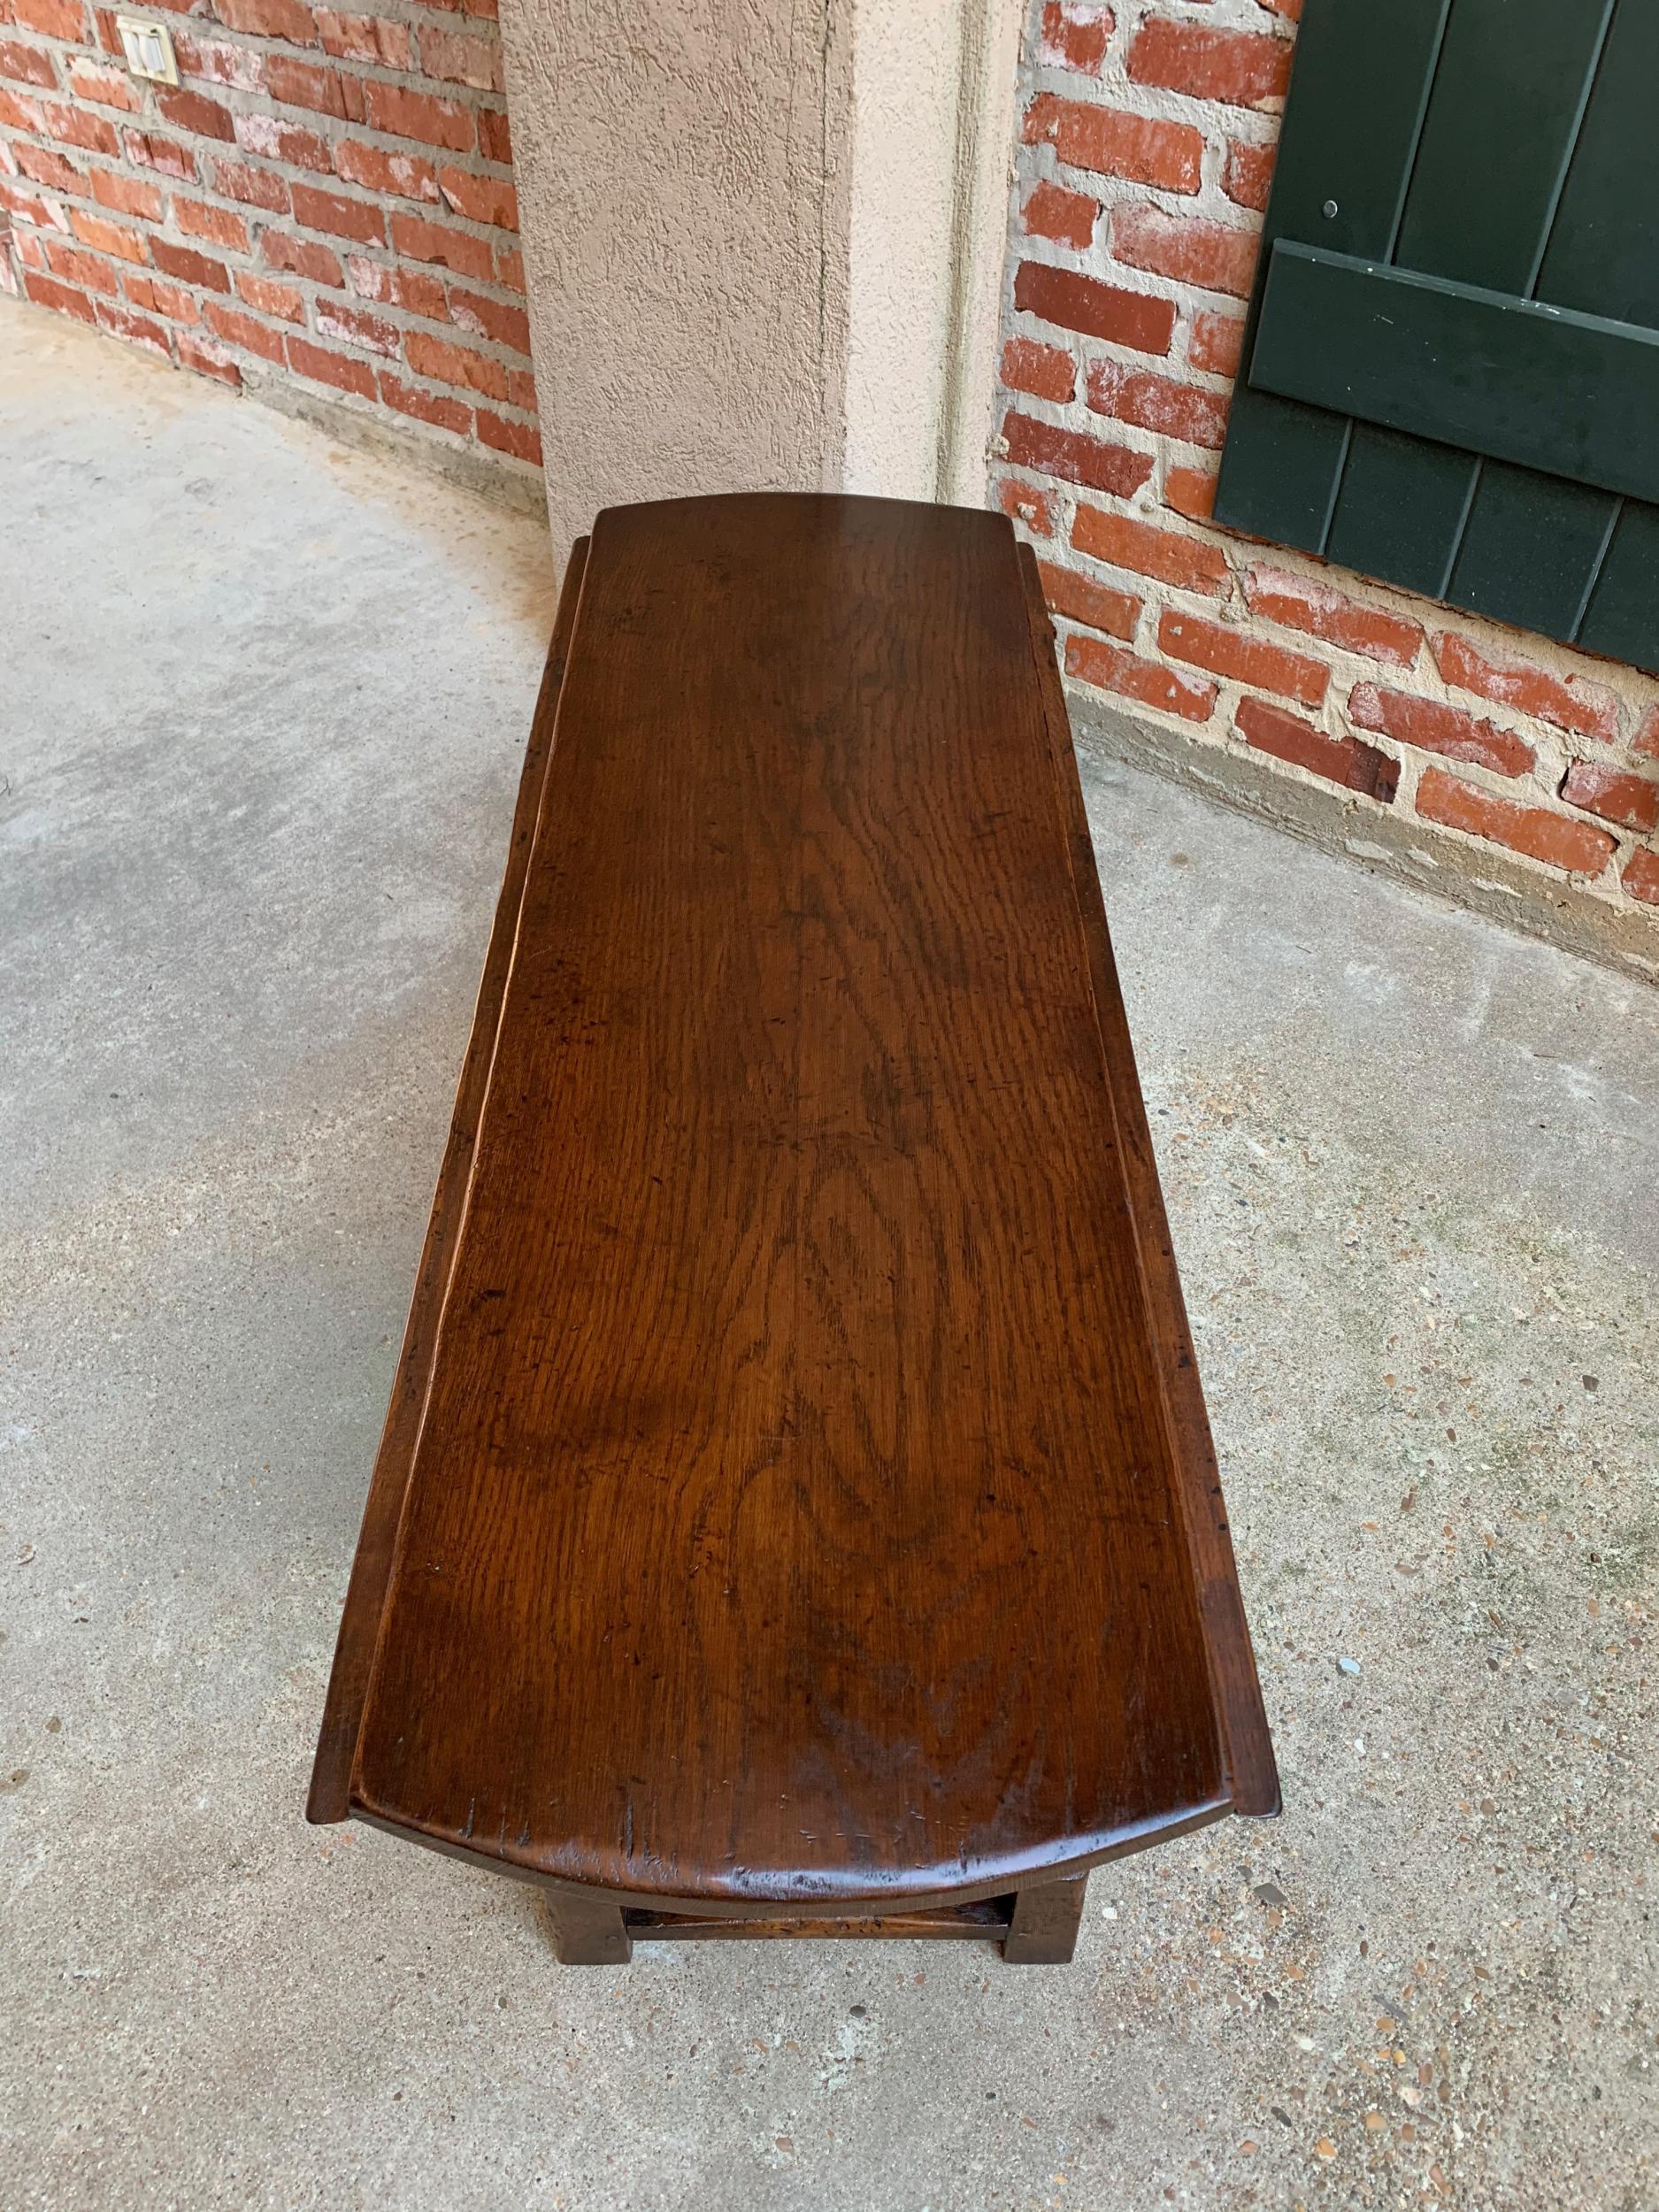 Vintage English Coffee Table Drop Leaf  Jacobean Gate Leg Wake Table Design 10